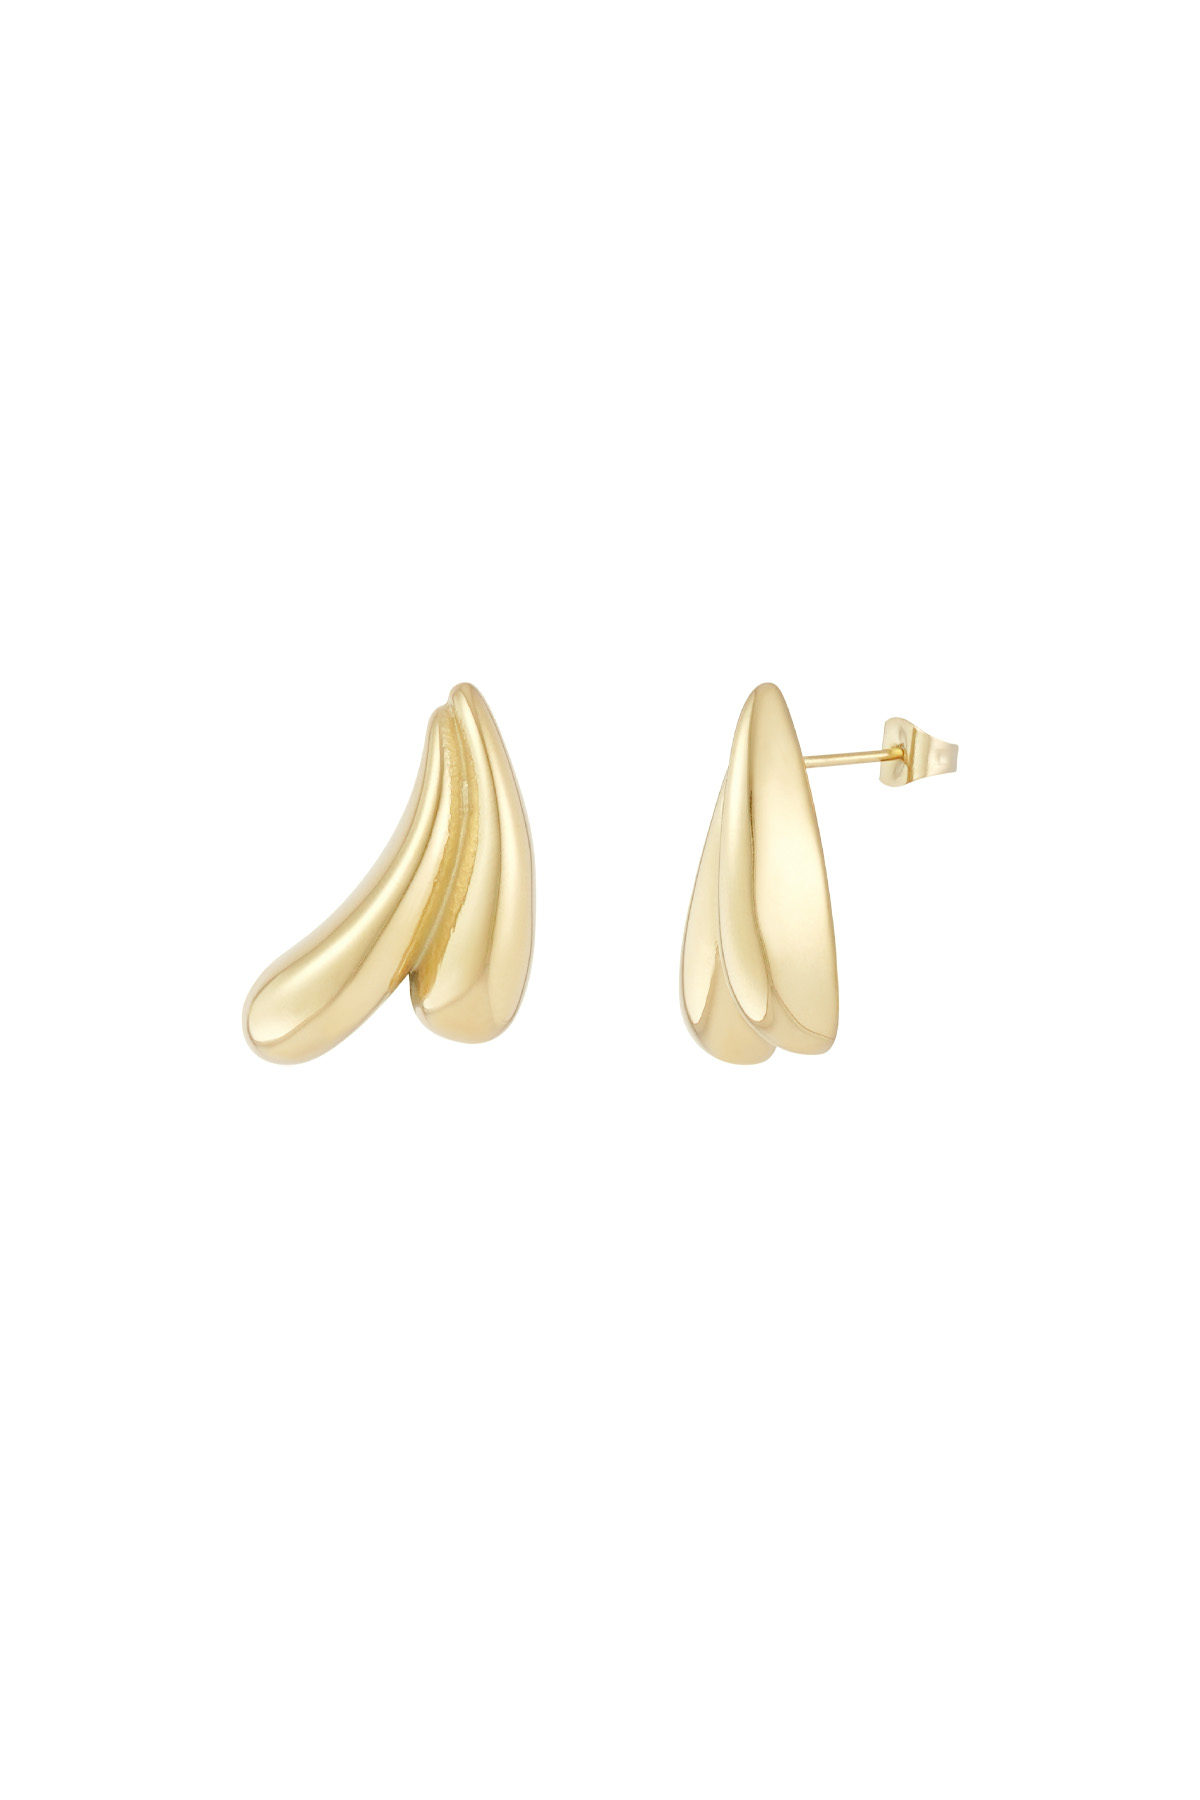 Earrings drippies - gold